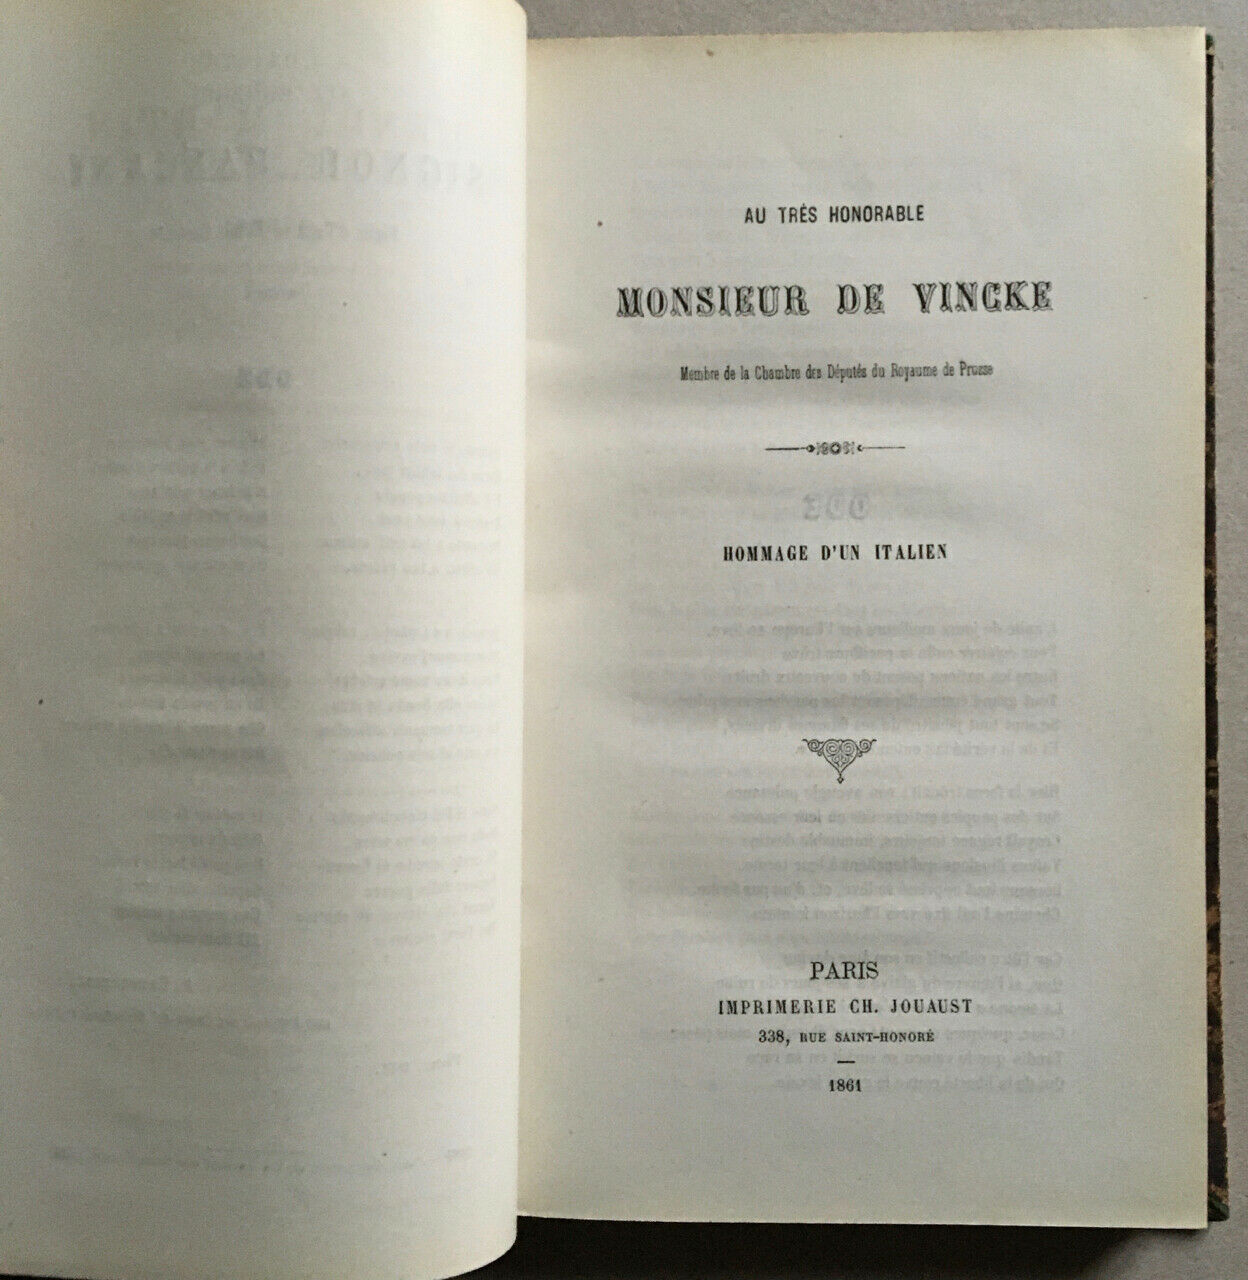 F. Campadelli — Hours of exile - Fugitive poems — Masonic binding — [1863].